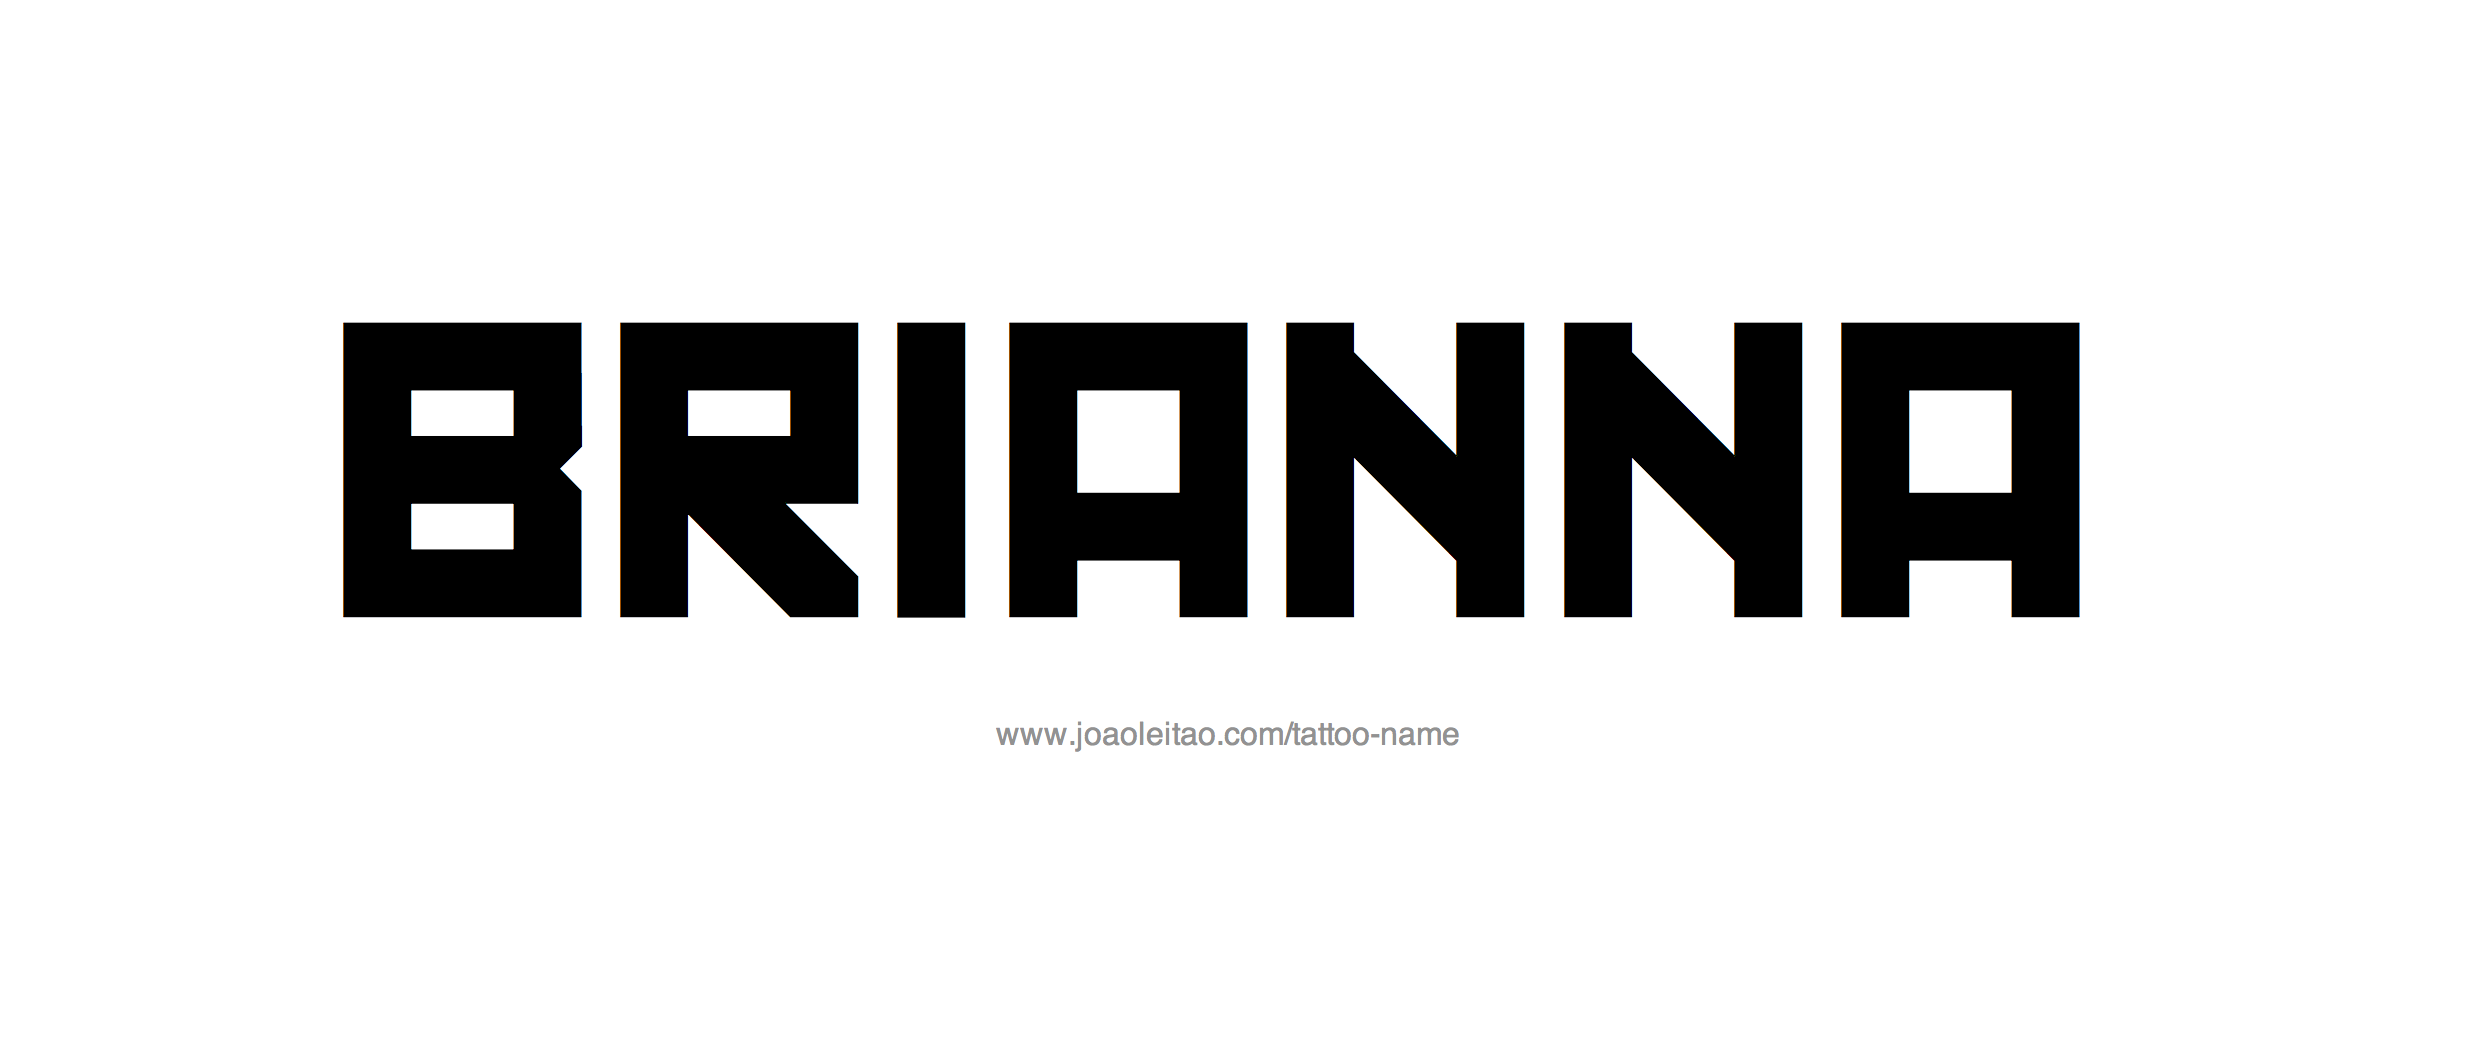 Tattoo Design Name Brianna 